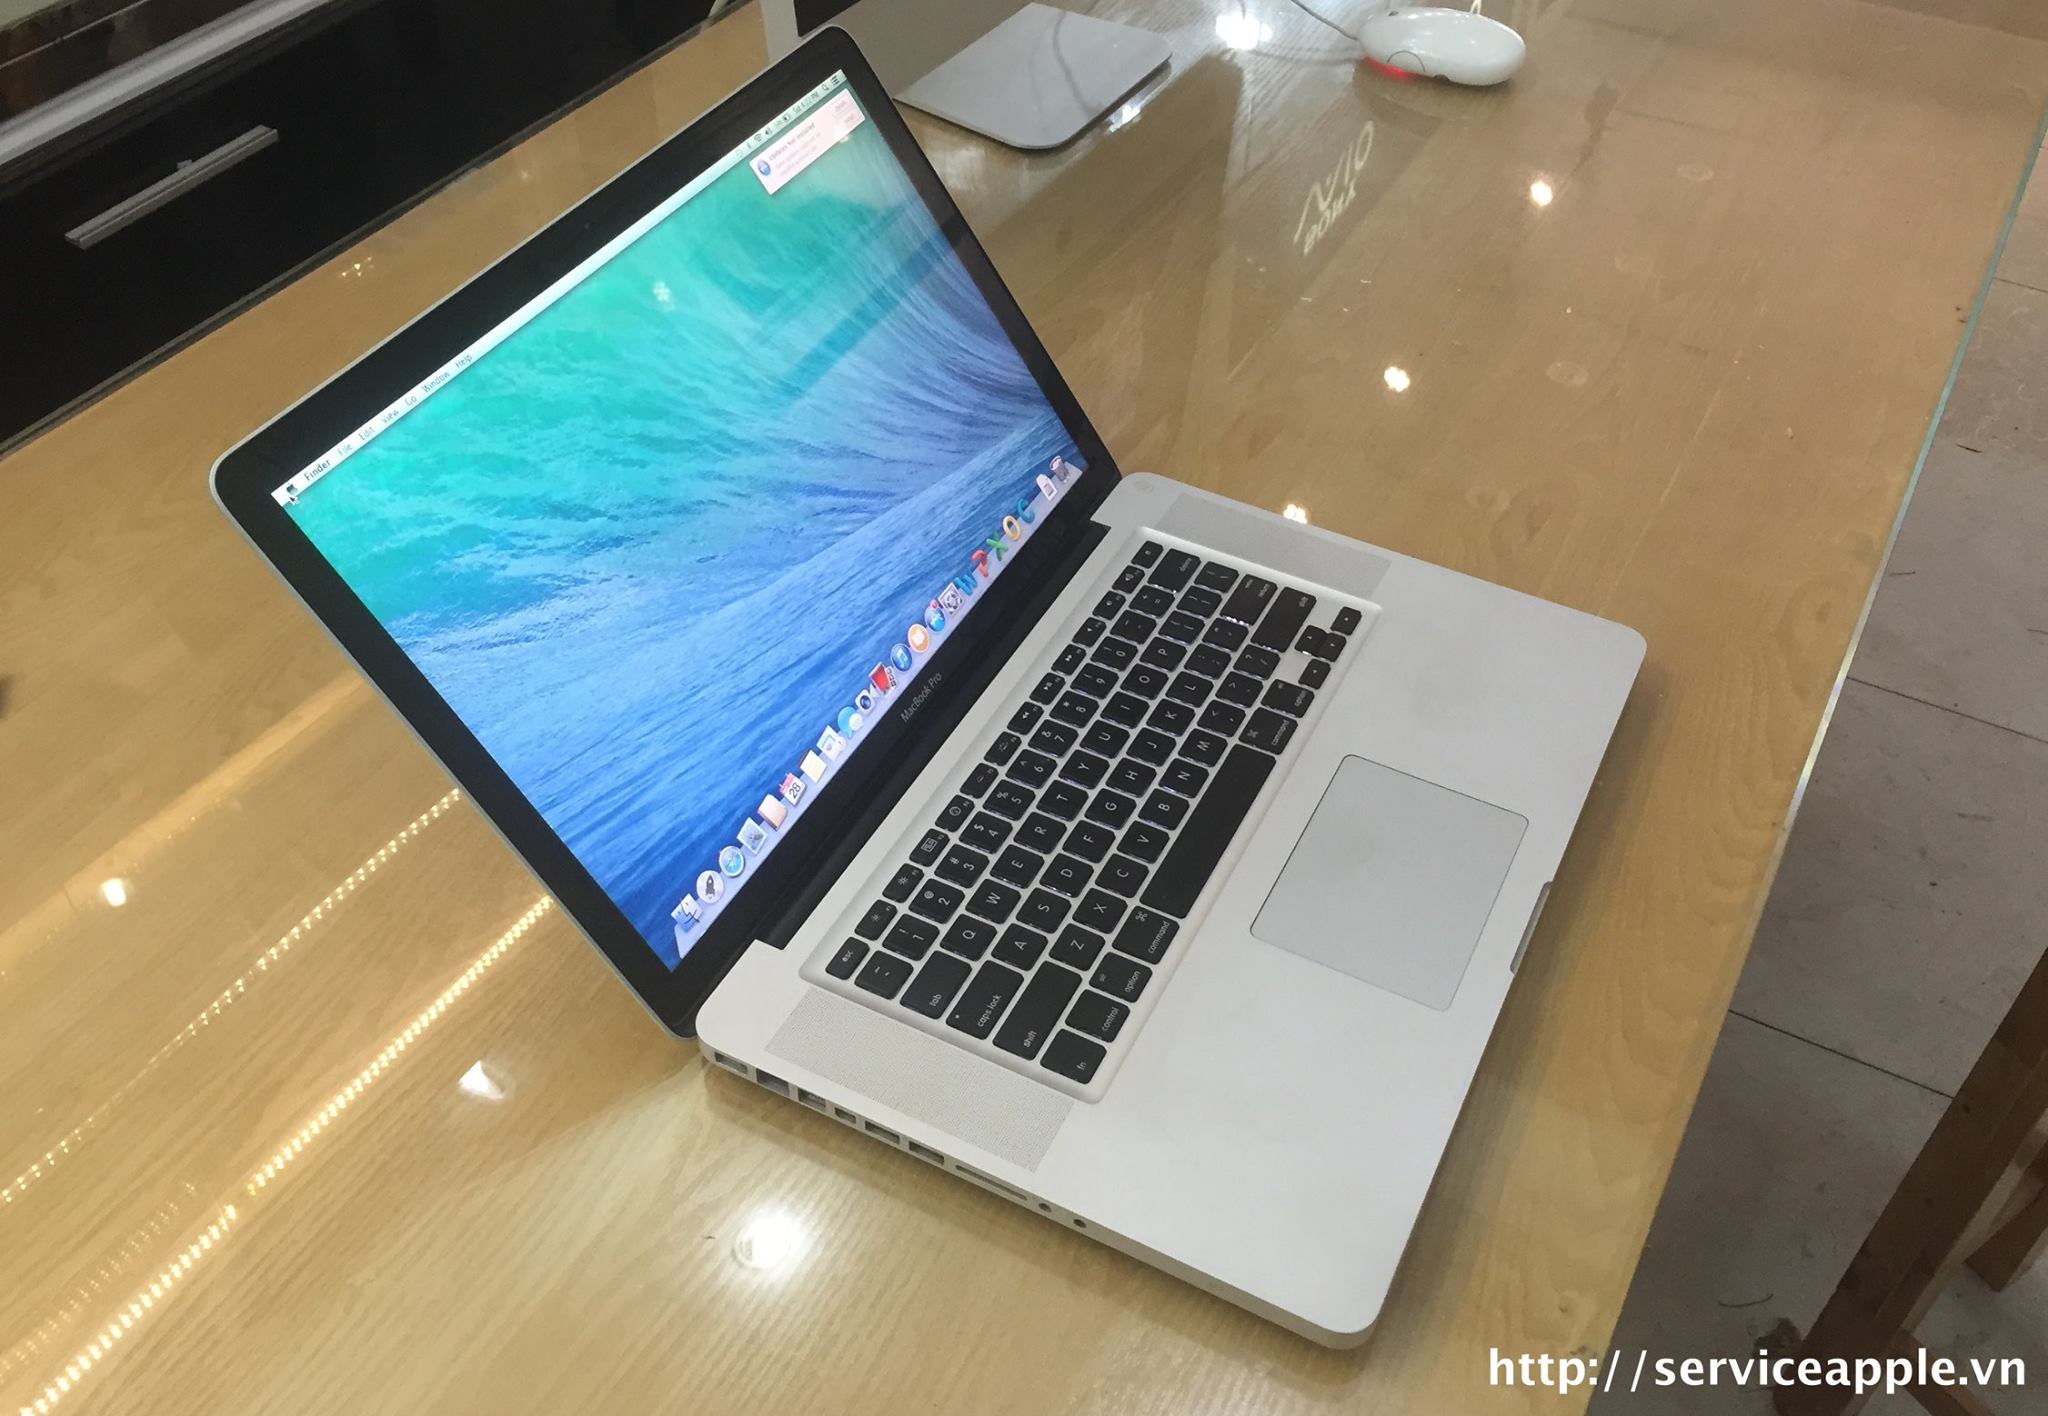 Macbook Pro A1286 MC985.jpg